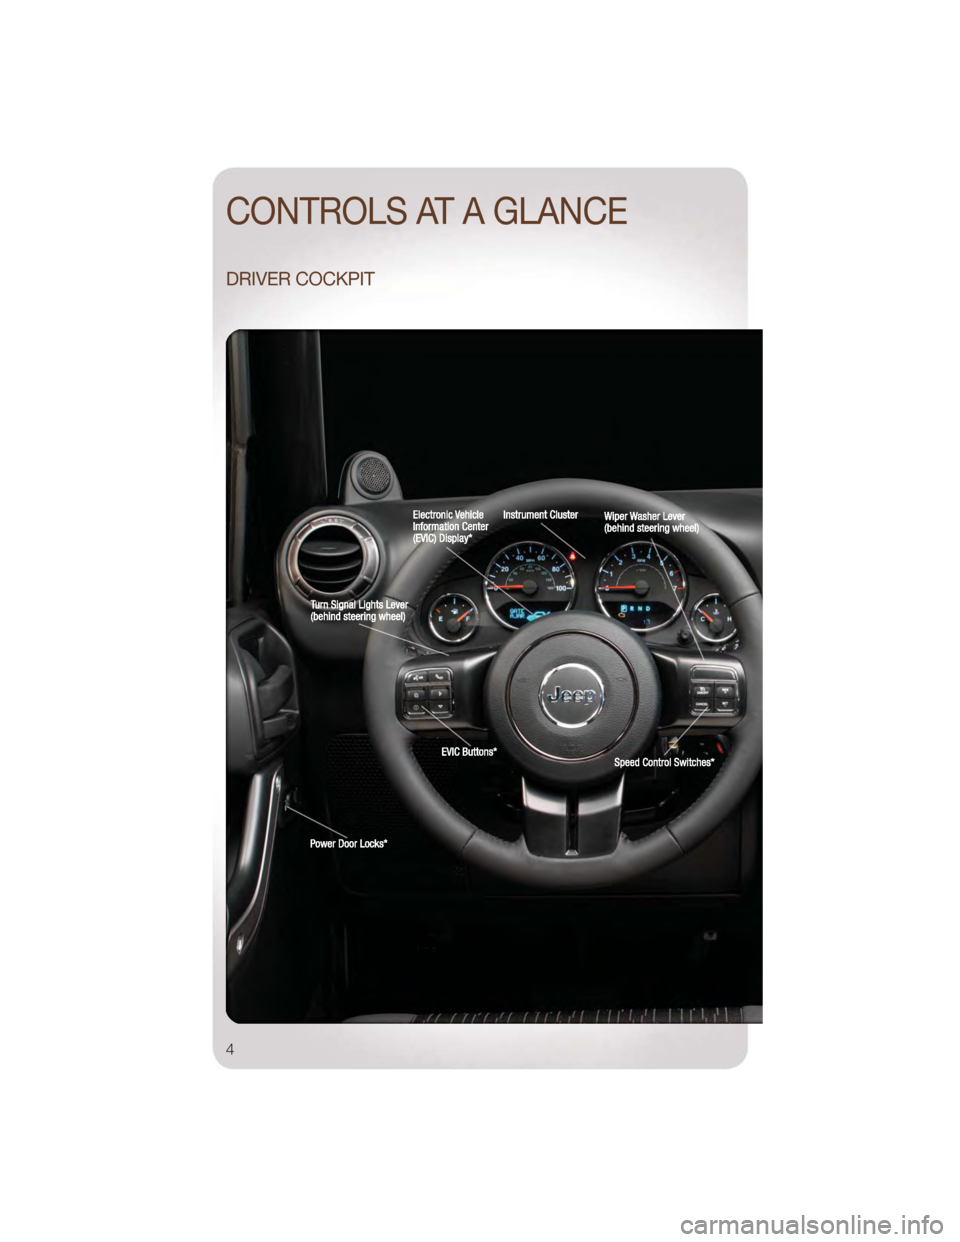 JEEP WRANGLER 2011 JK / 3.G User Guide DRIVER COCKPIT
CONTROLS AT A GLANCE
4 